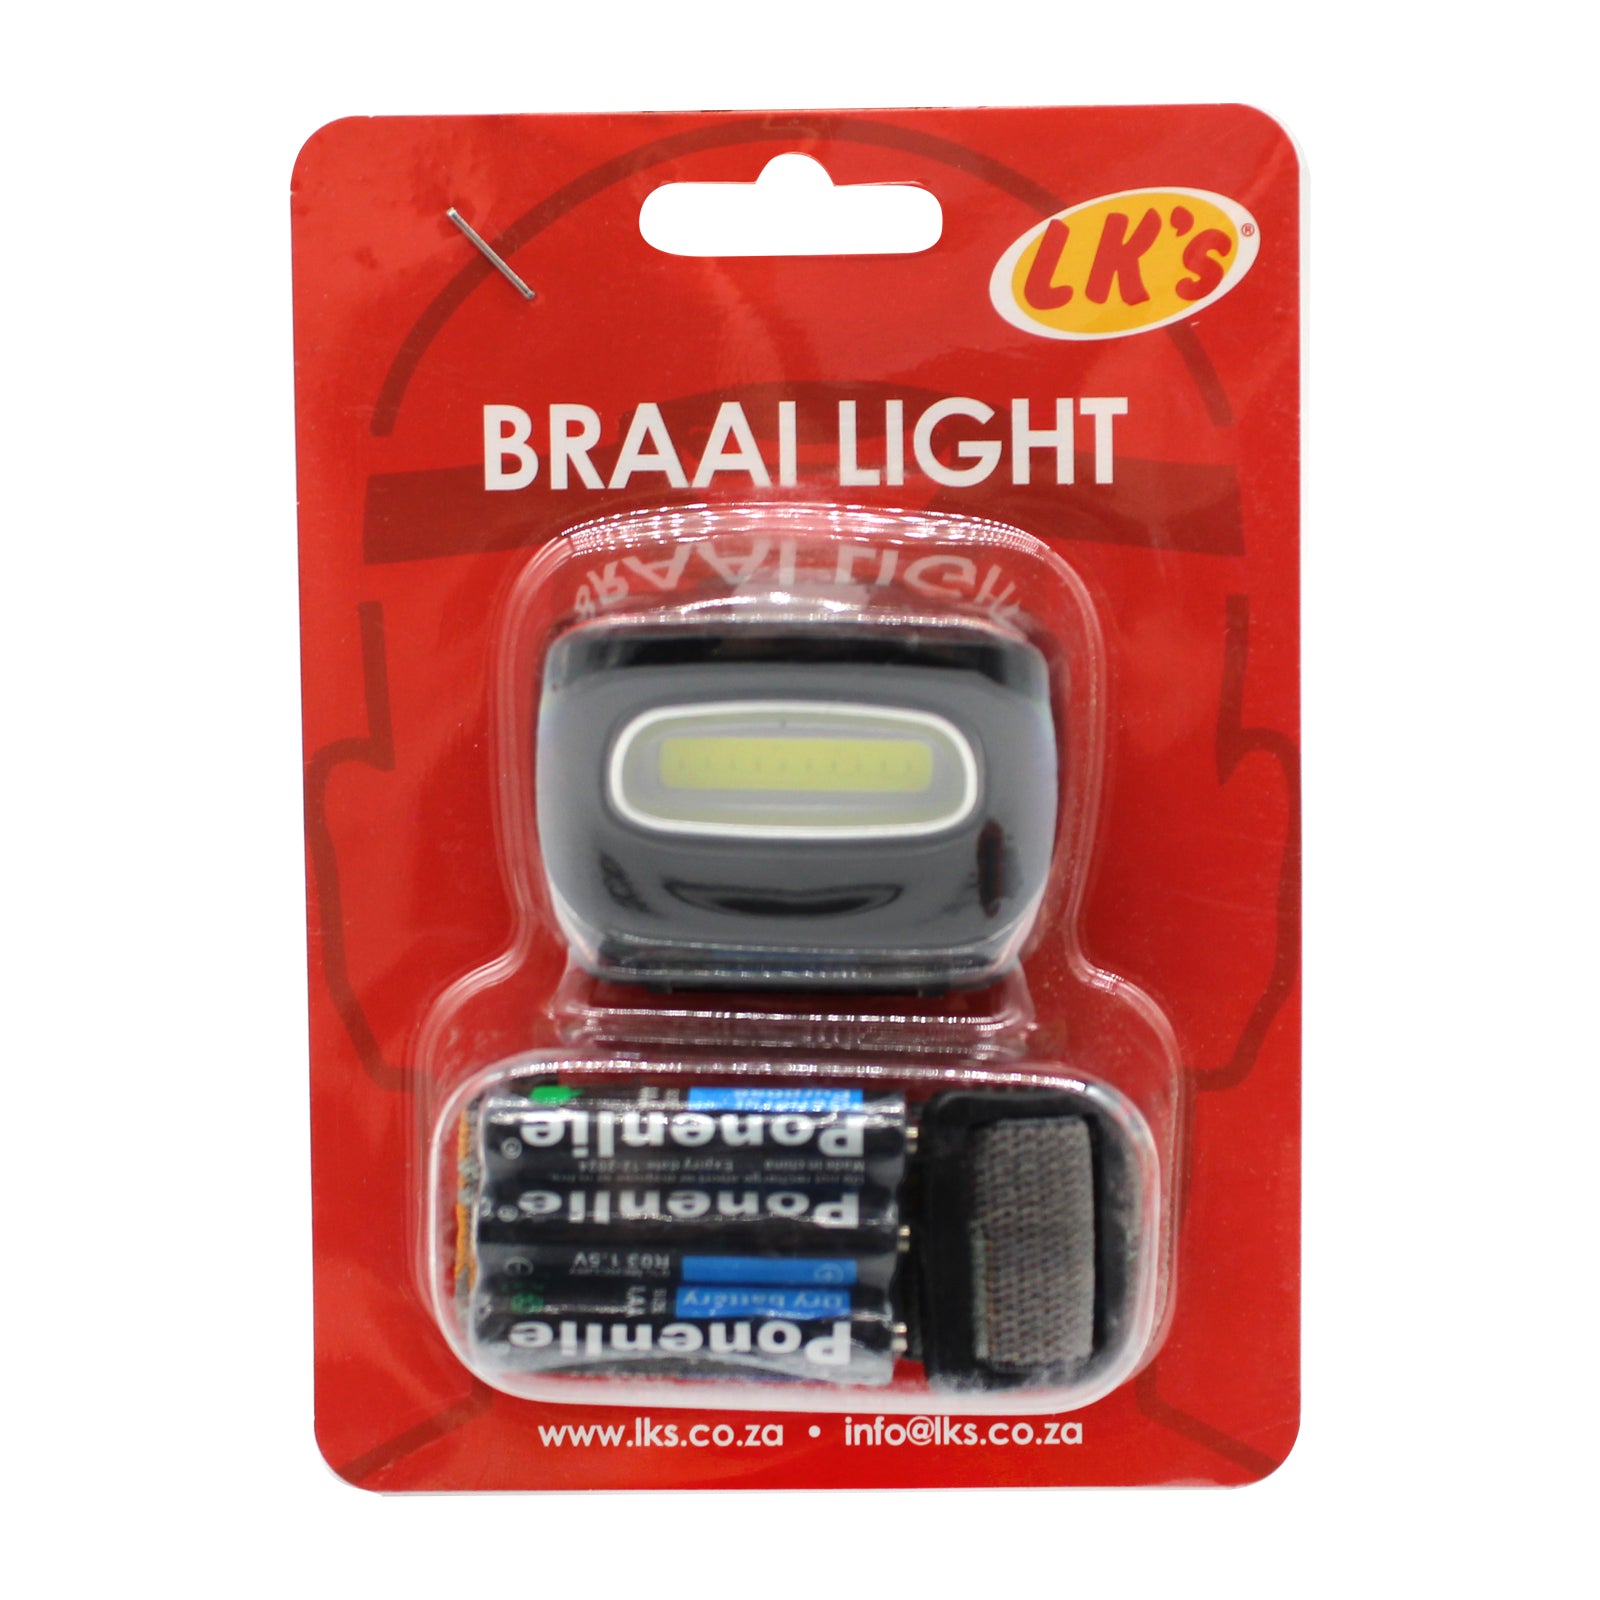 LK's Braai Light in Packaging